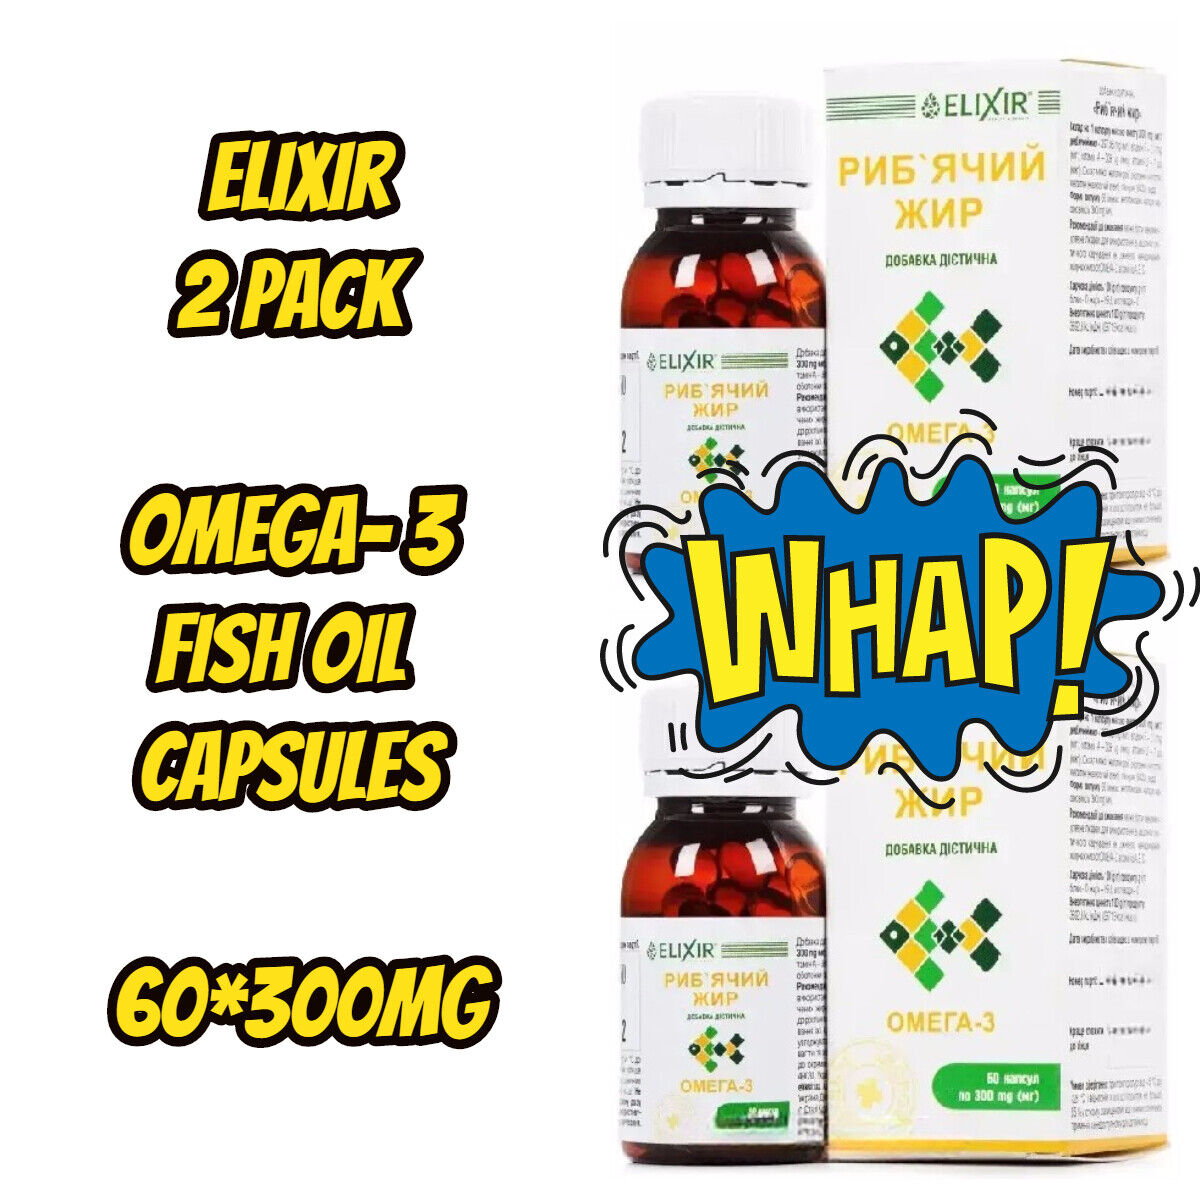 Elixir 2pack Omega-3 Fish Oil Fat Capsules Pills  60*300mg from UA Рыбий жир